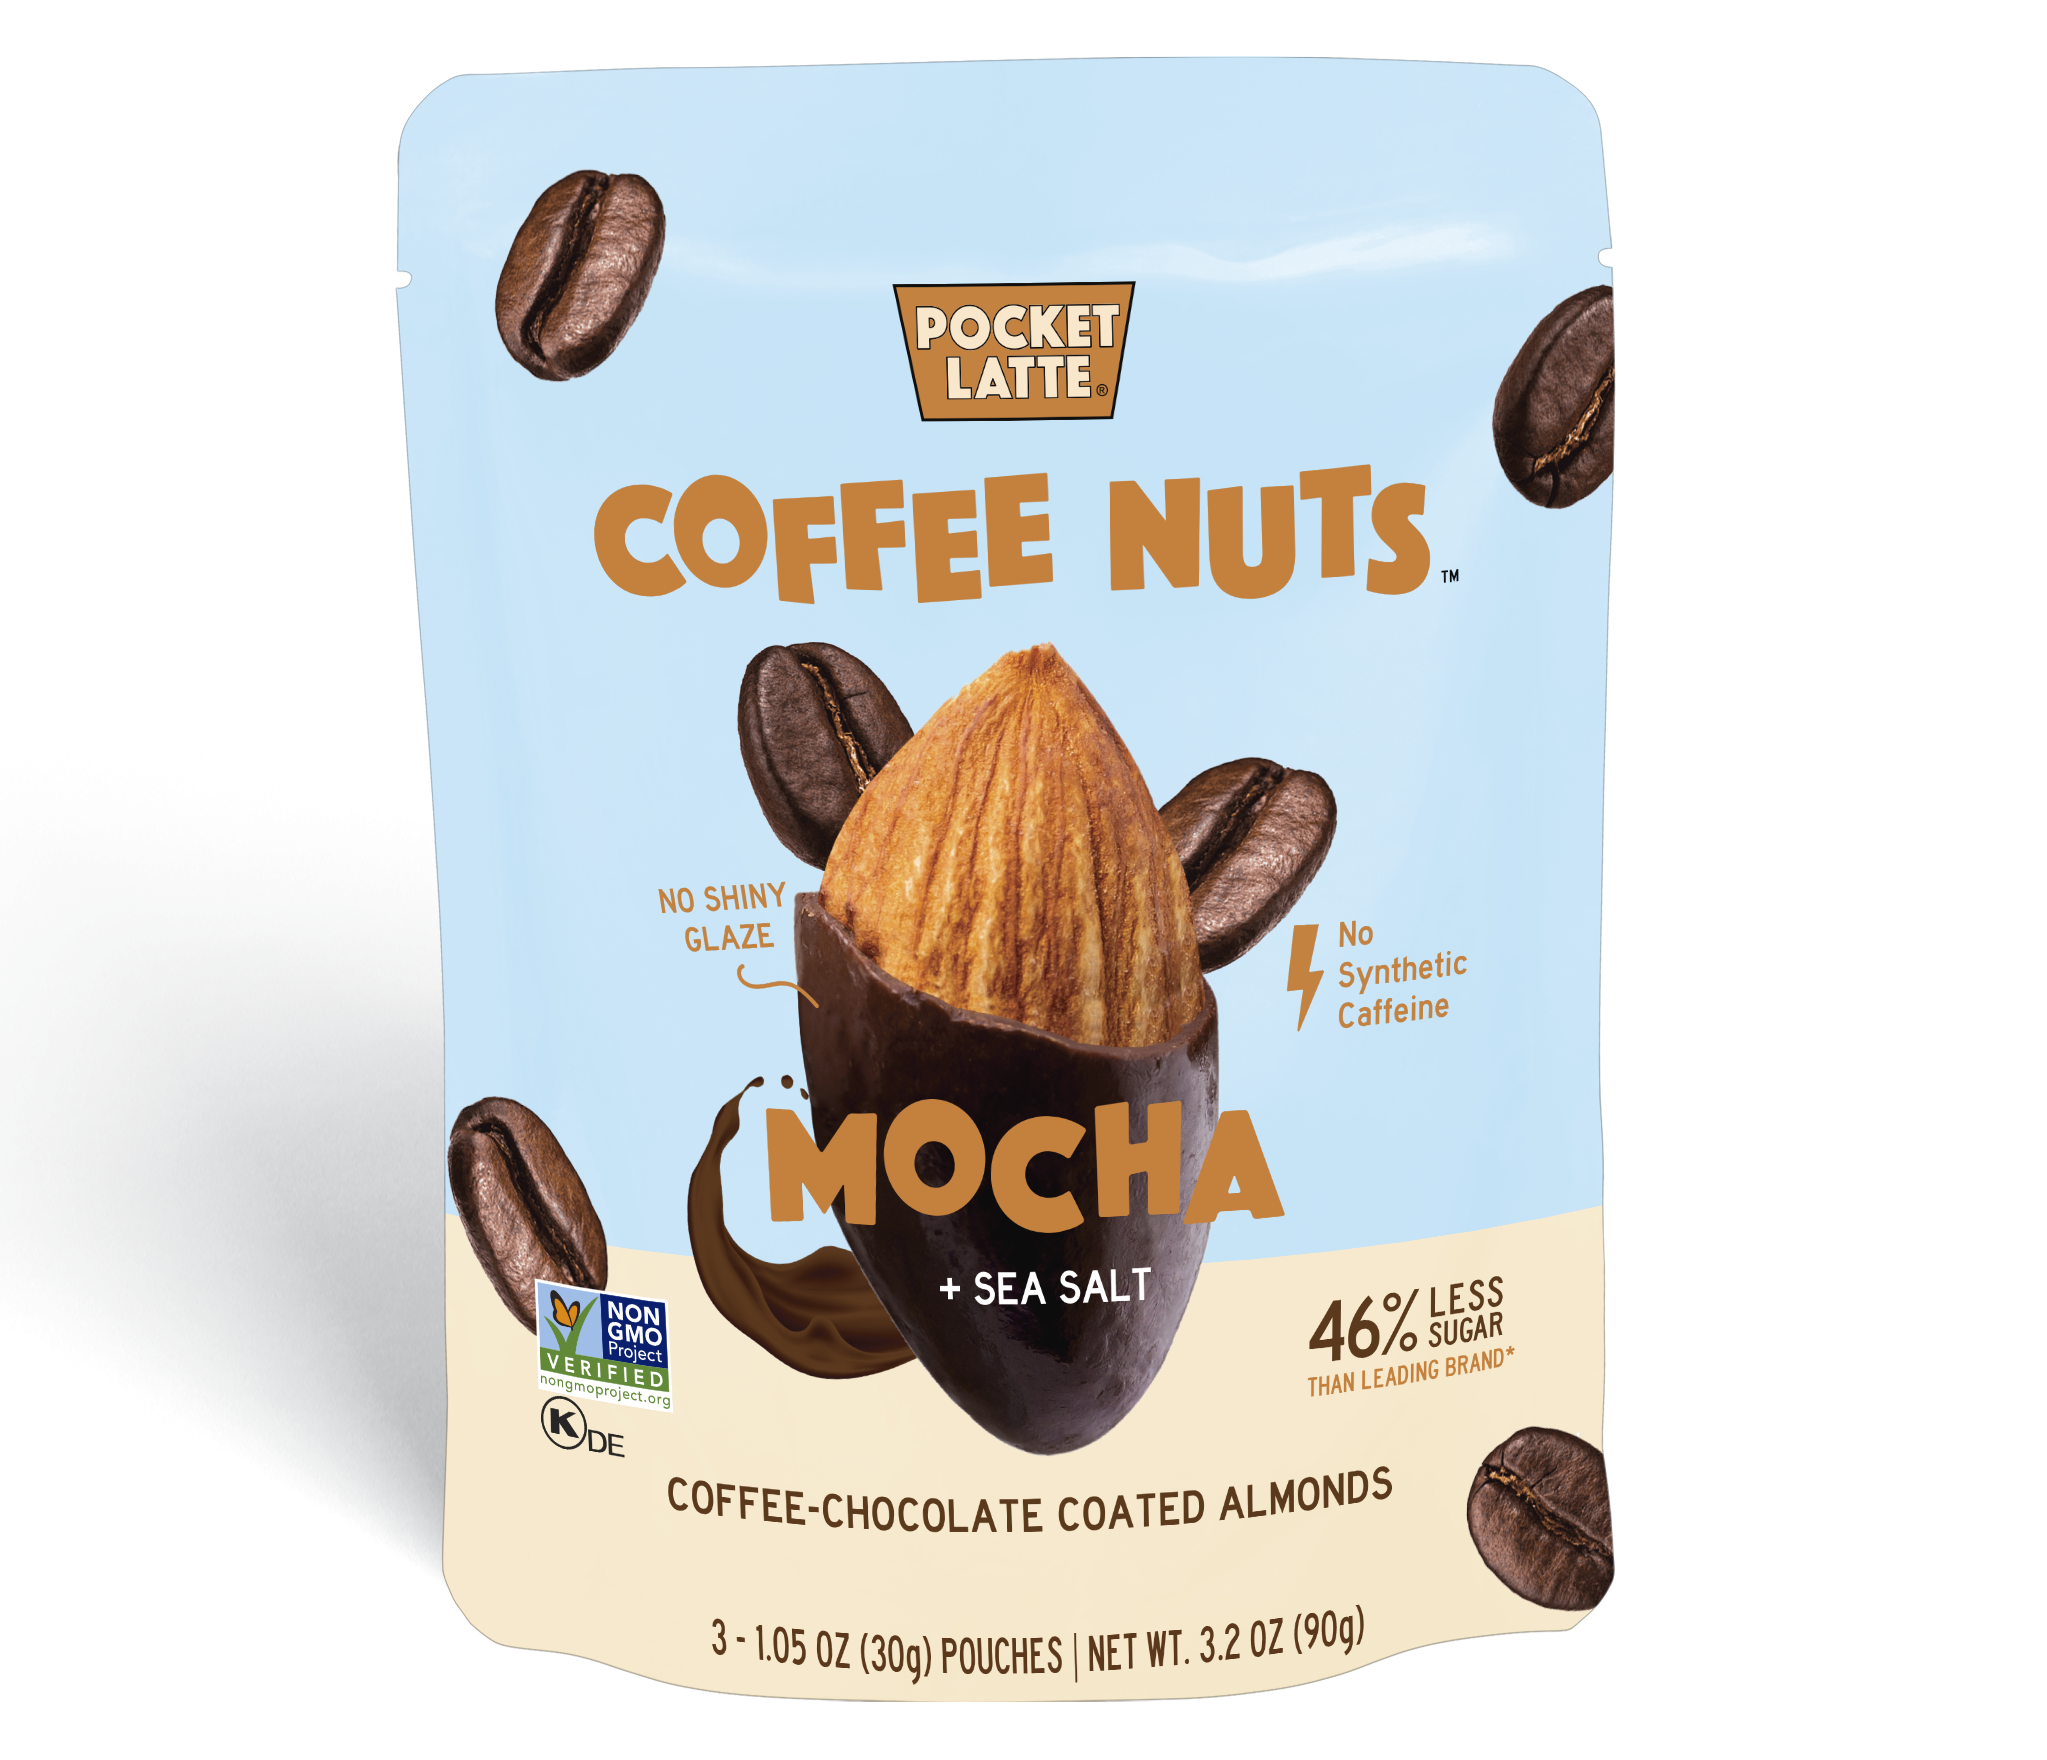 Pocket Latte "Mocha + Sea Salt" Coffee Nuts 6 units per case 3.2 oz